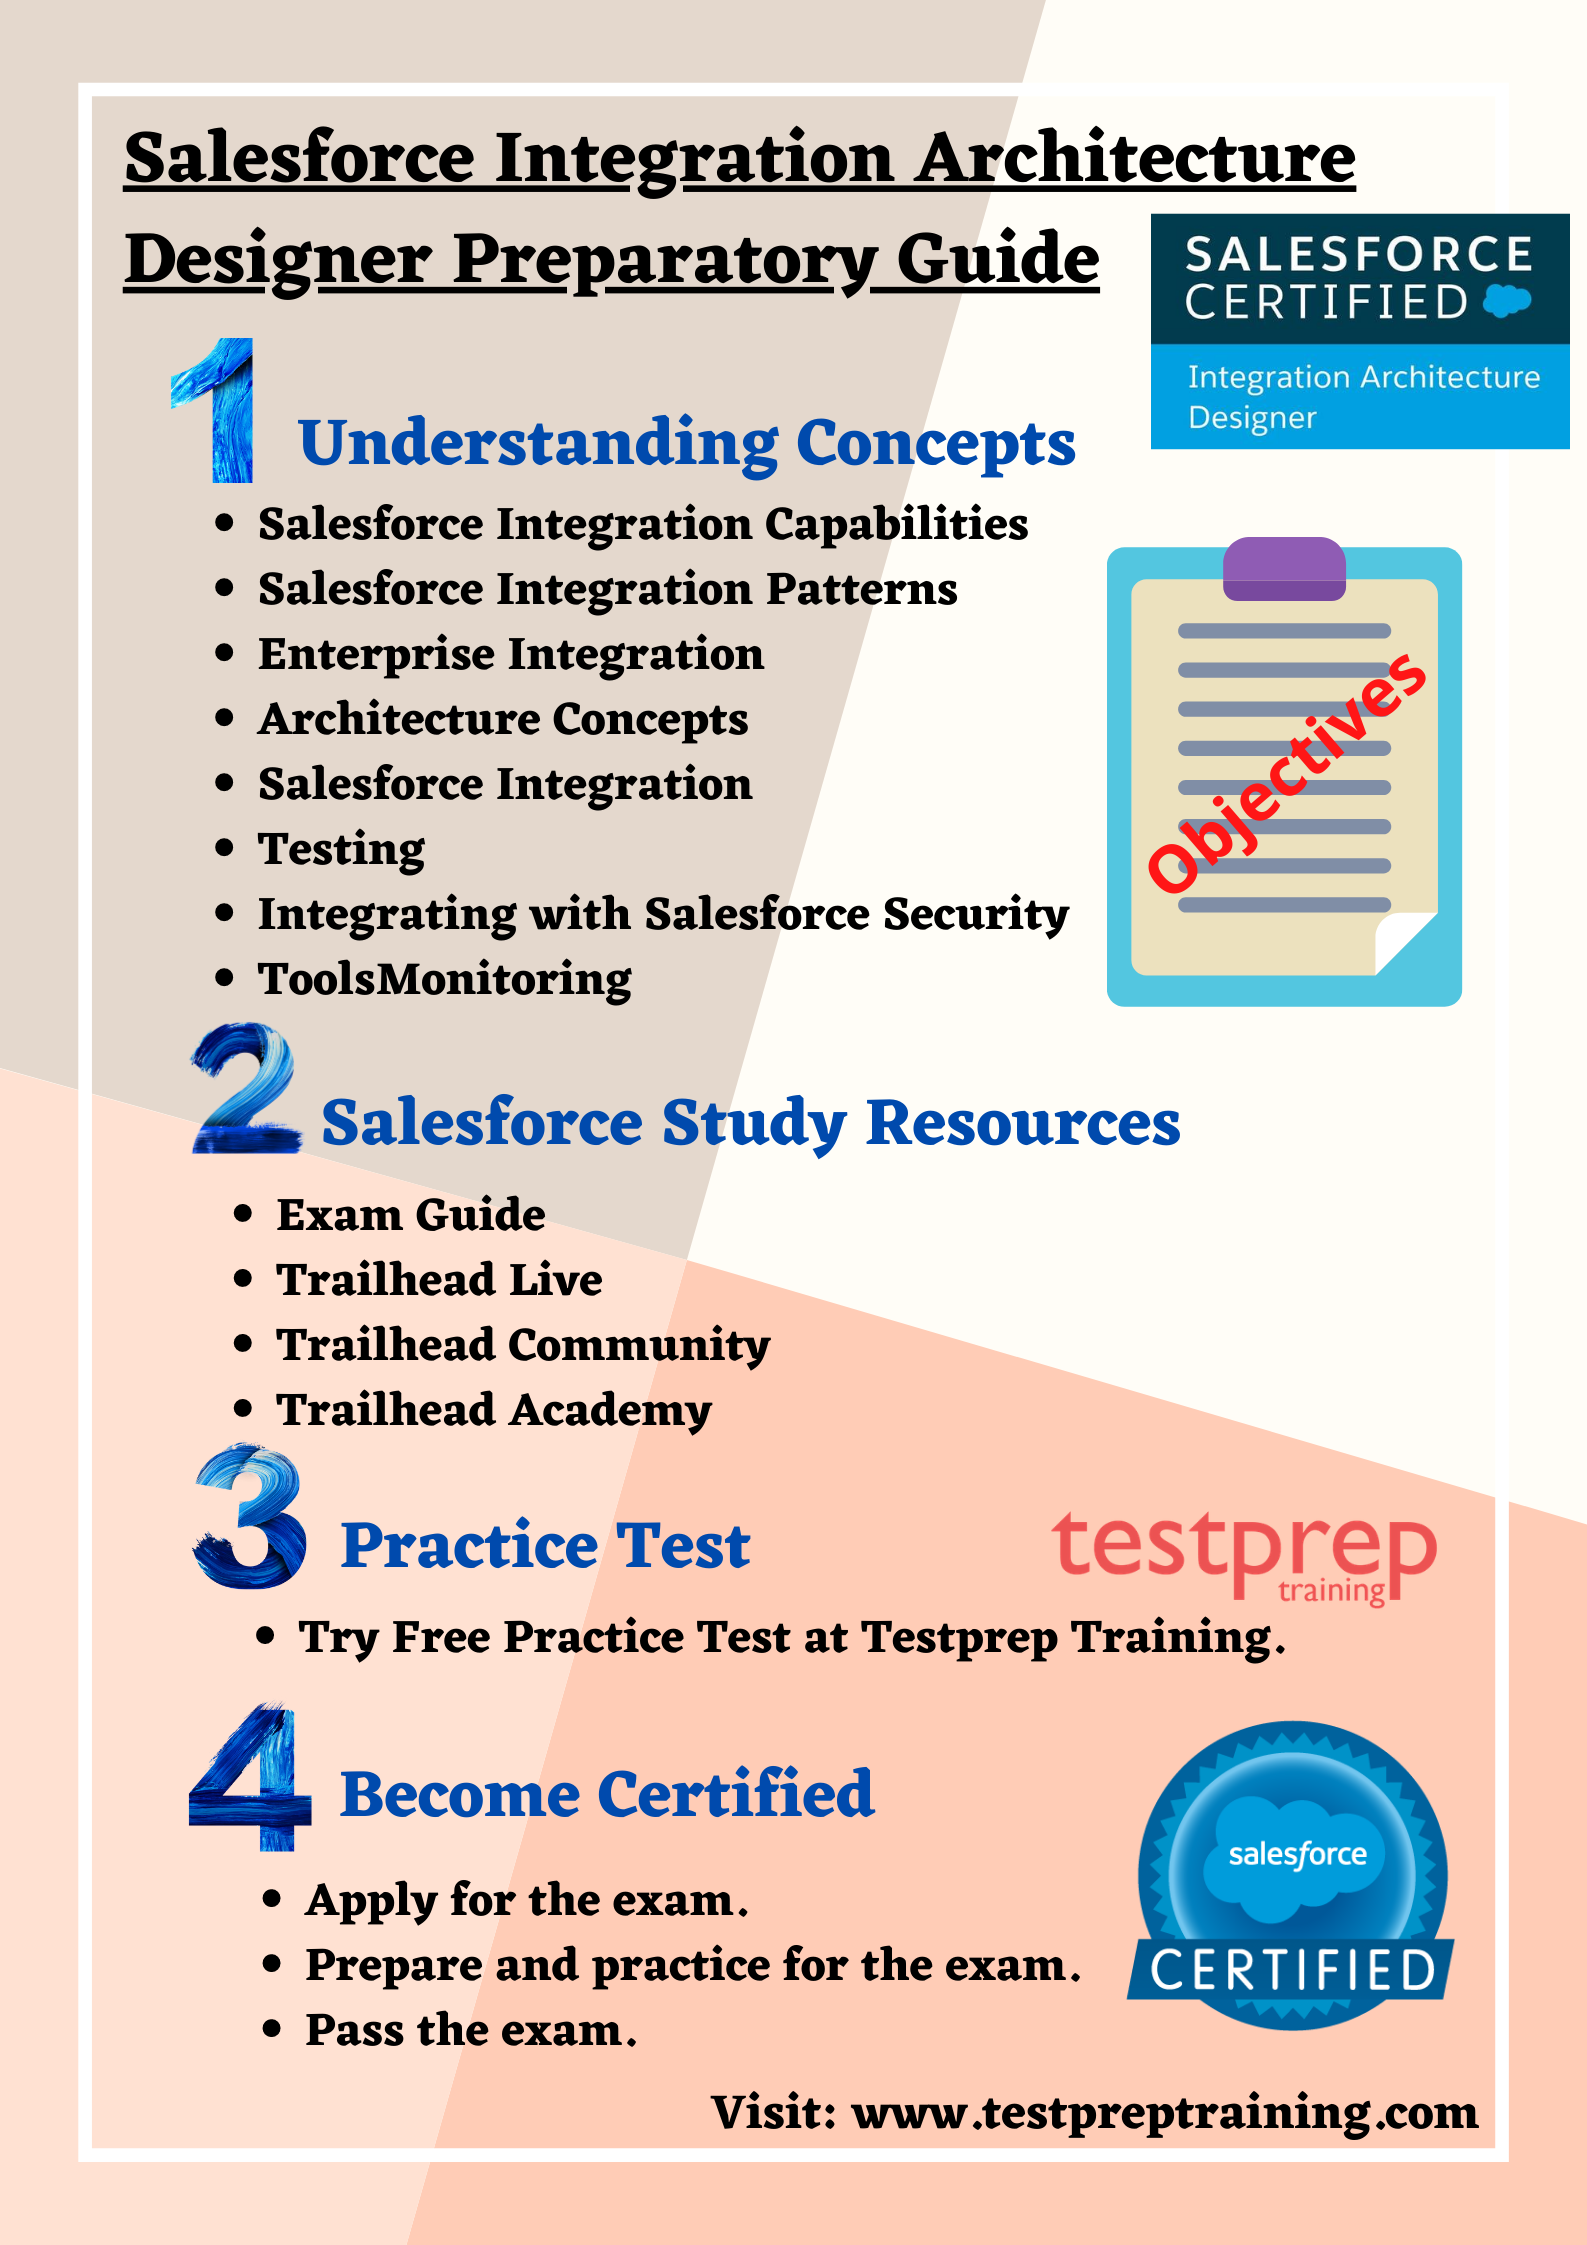 Salesforce Integration Architecture Designer preparatory guide